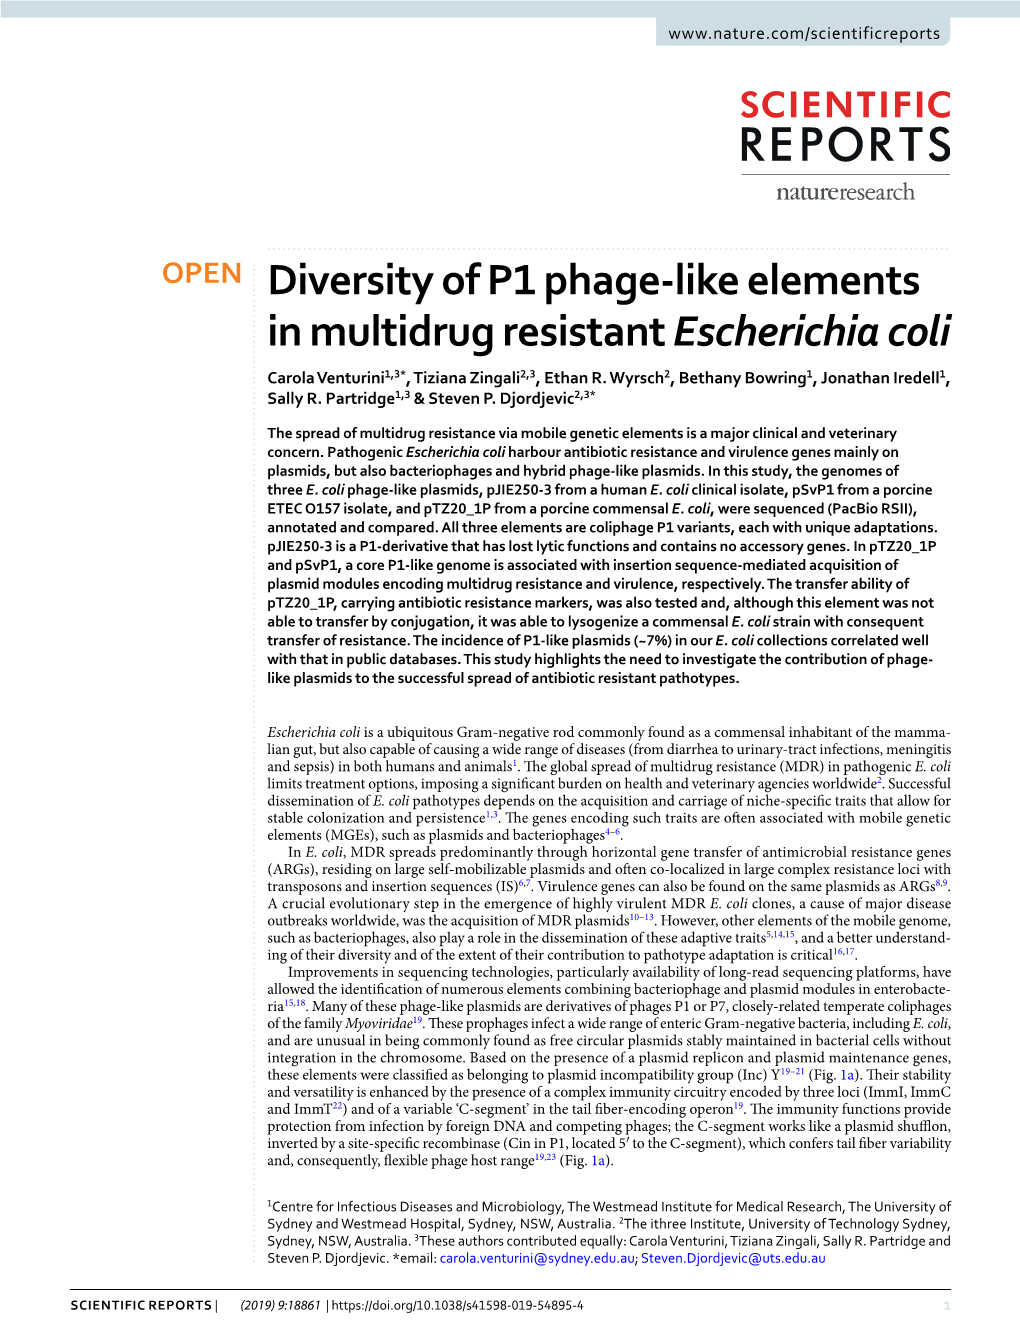 Diversity of P1 Phage-Like Elements in Multidrug Resistant Escherichia Coli Carola Venturini1,3*, Tiziana Zingali2,3, Ethan R